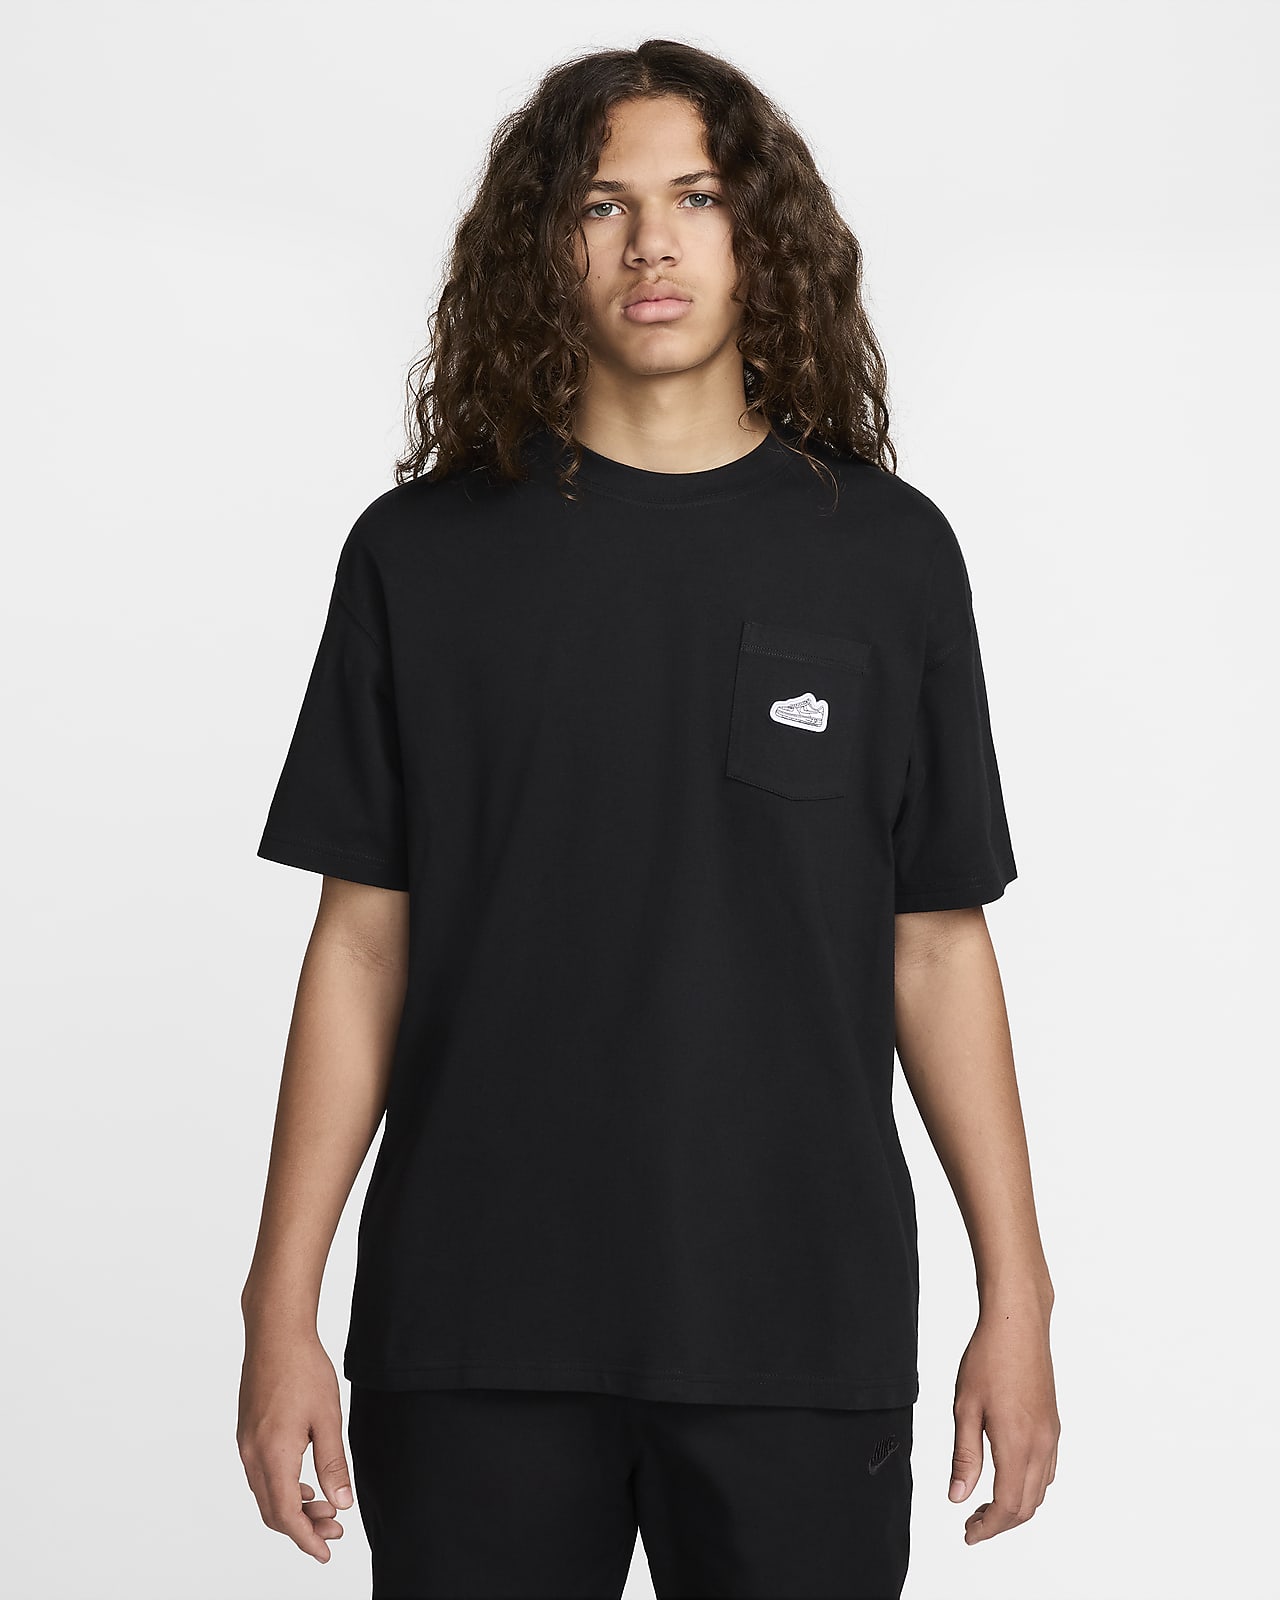 Nike Sportswear Max90 Men's T-Shirt